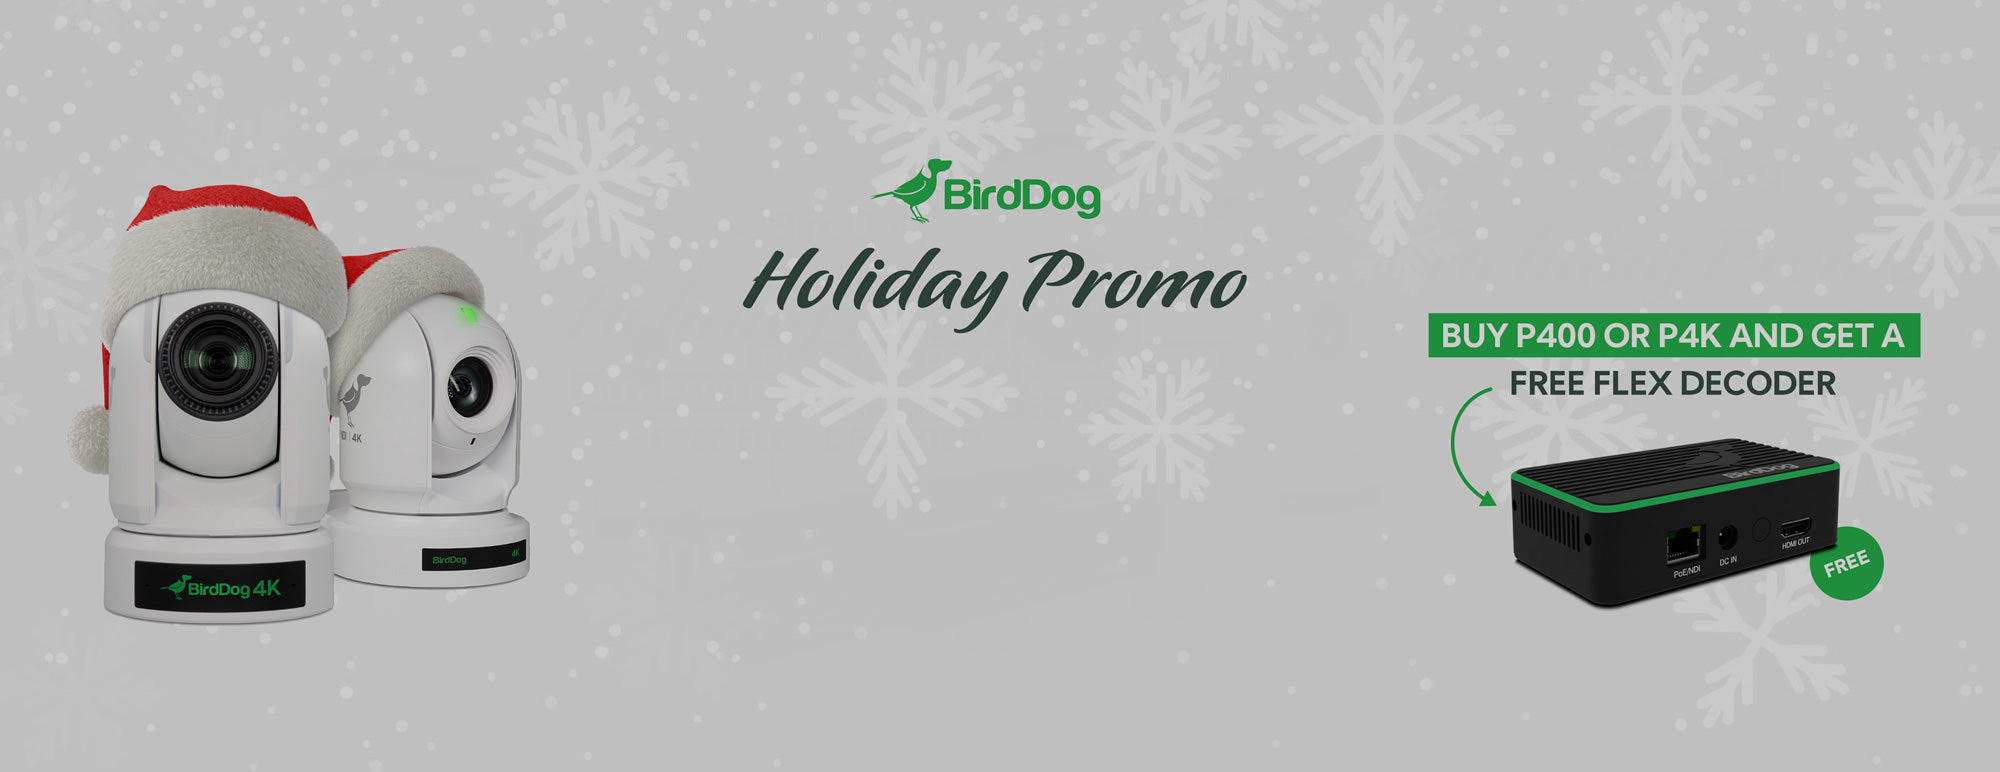 BirdDog Holiday Promo